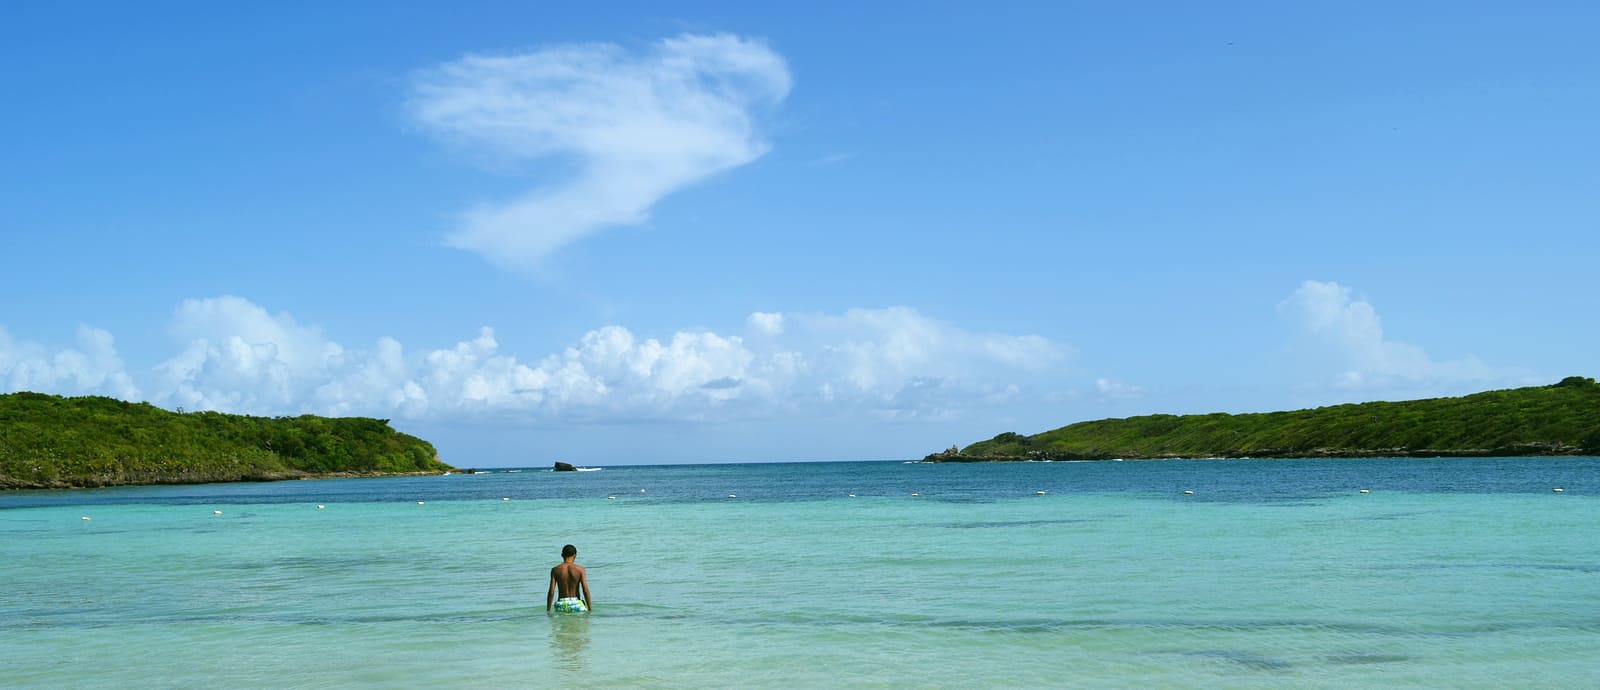 Swimming at Blue Beach (La Chiva), Vieques, Puerto Rico 1